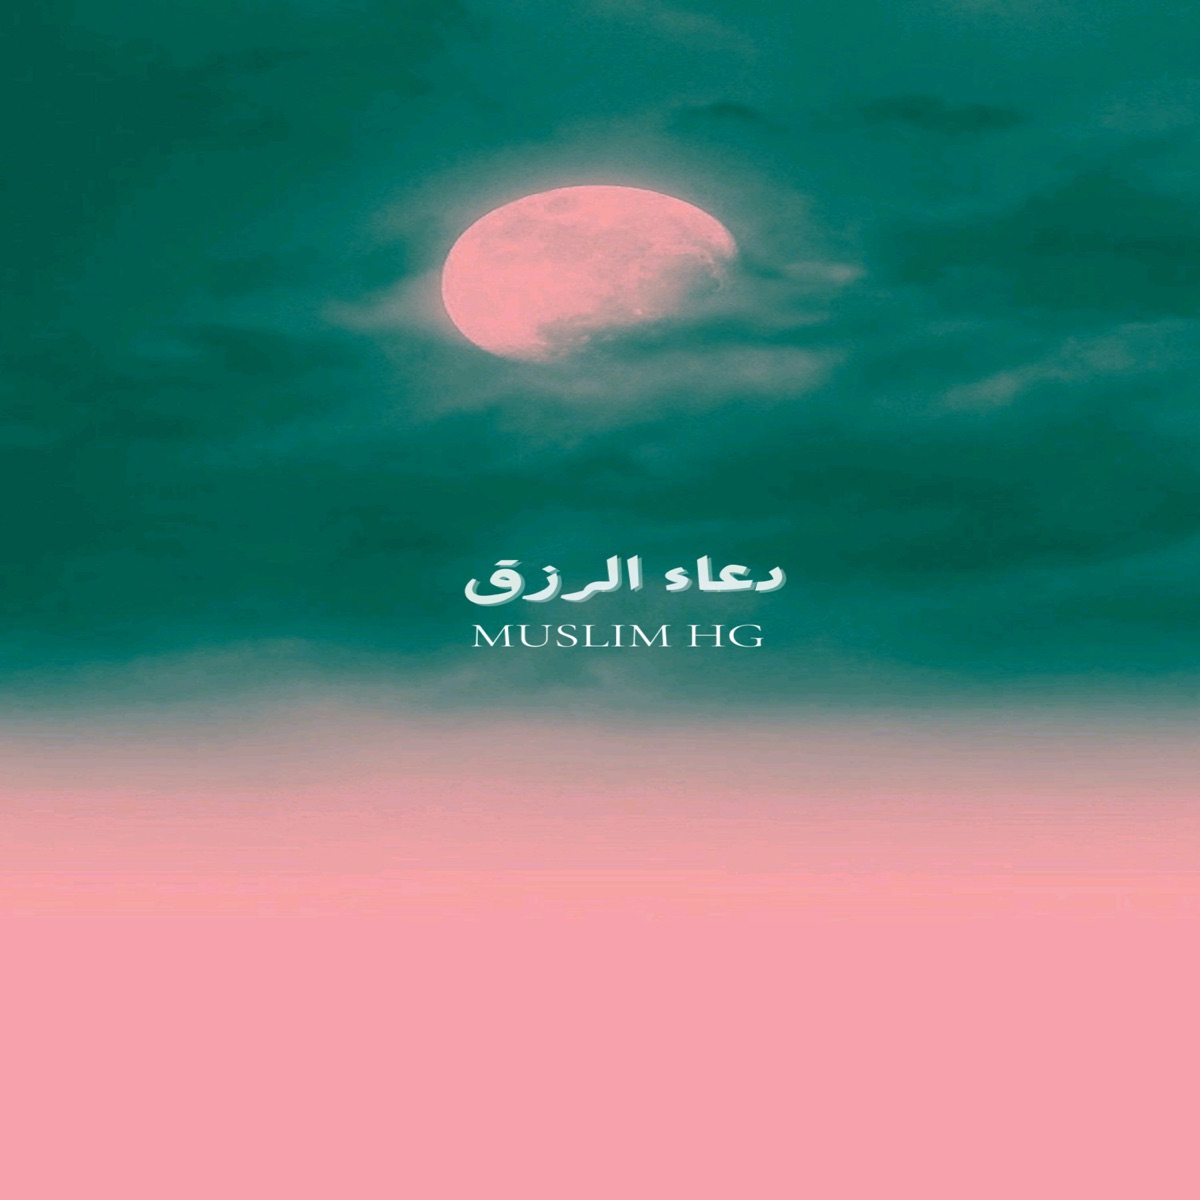 دعاء الرزق - Single - Album by Muslim HG - Apple Music